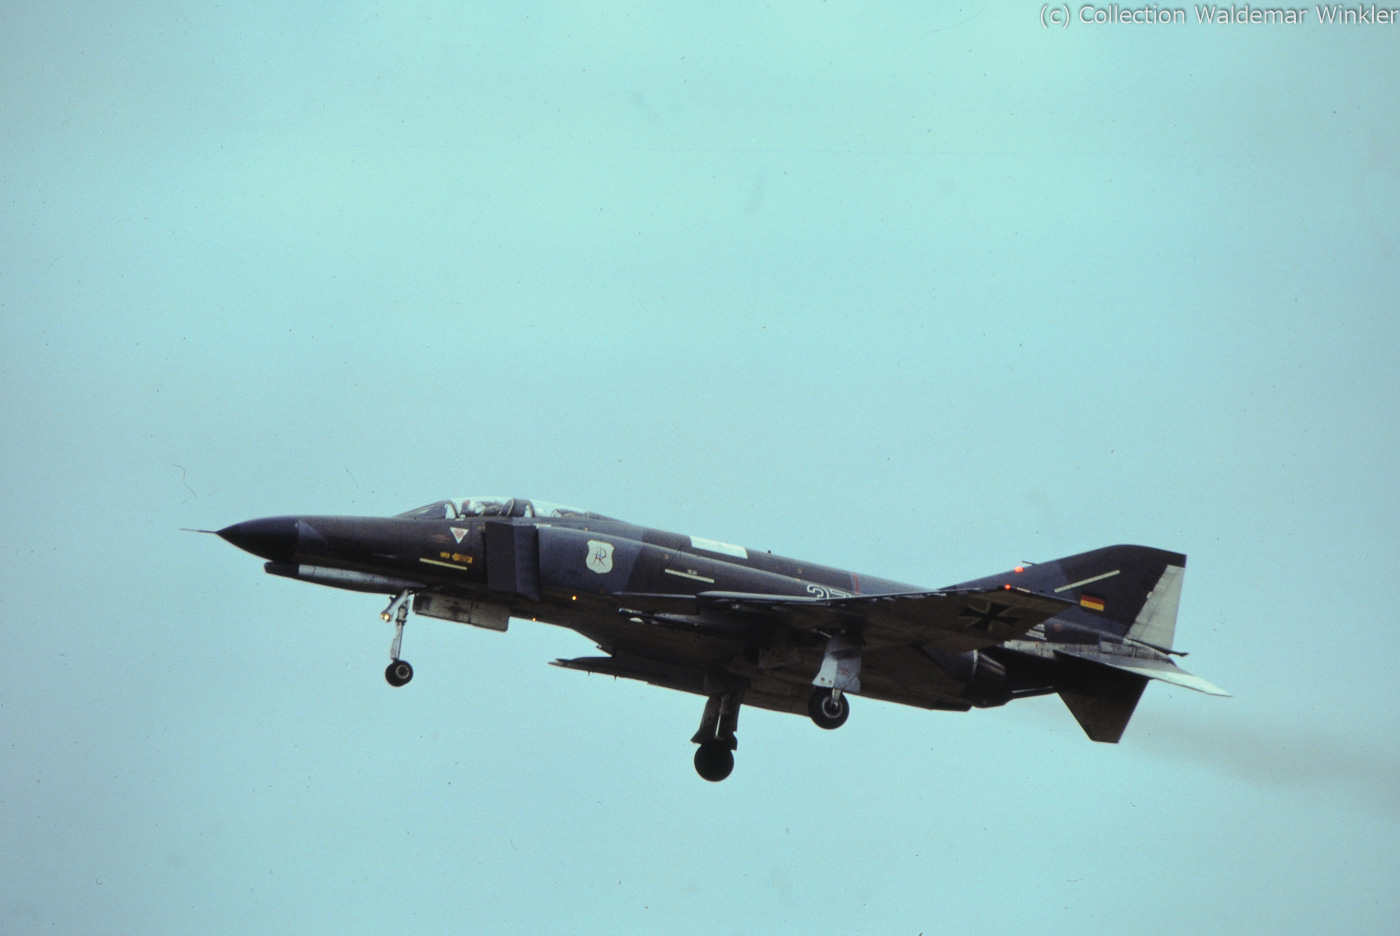 F-4_Phantom_II_DSC_1165.jpg